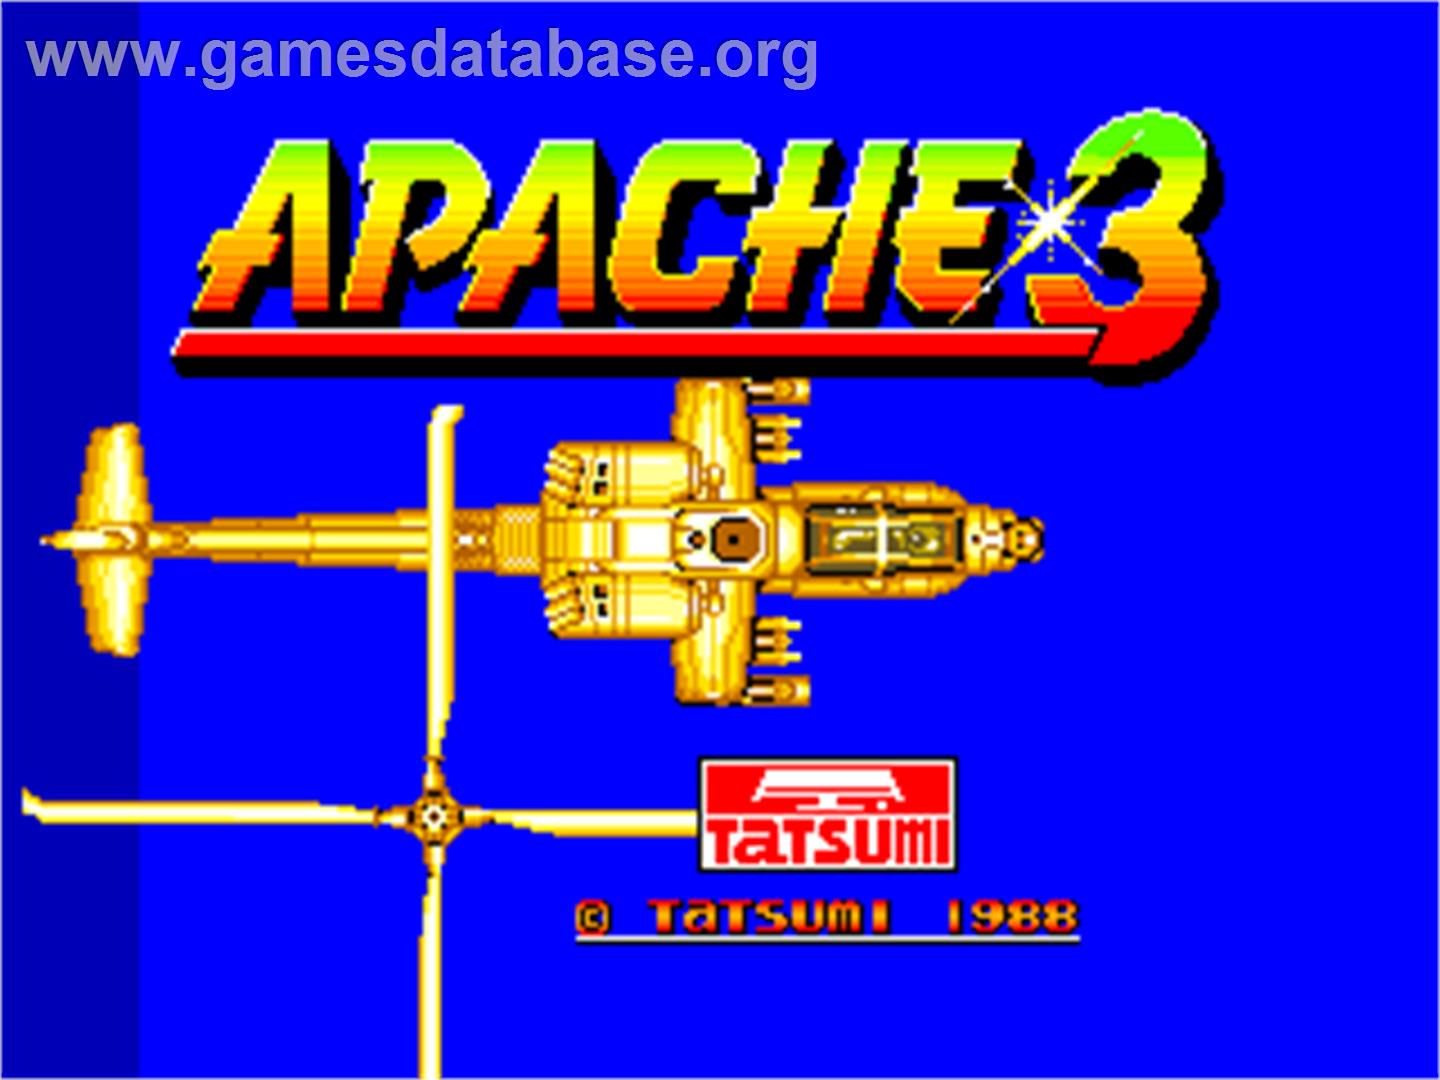 Apache 3 - Arcade - Artwork - Title Screen